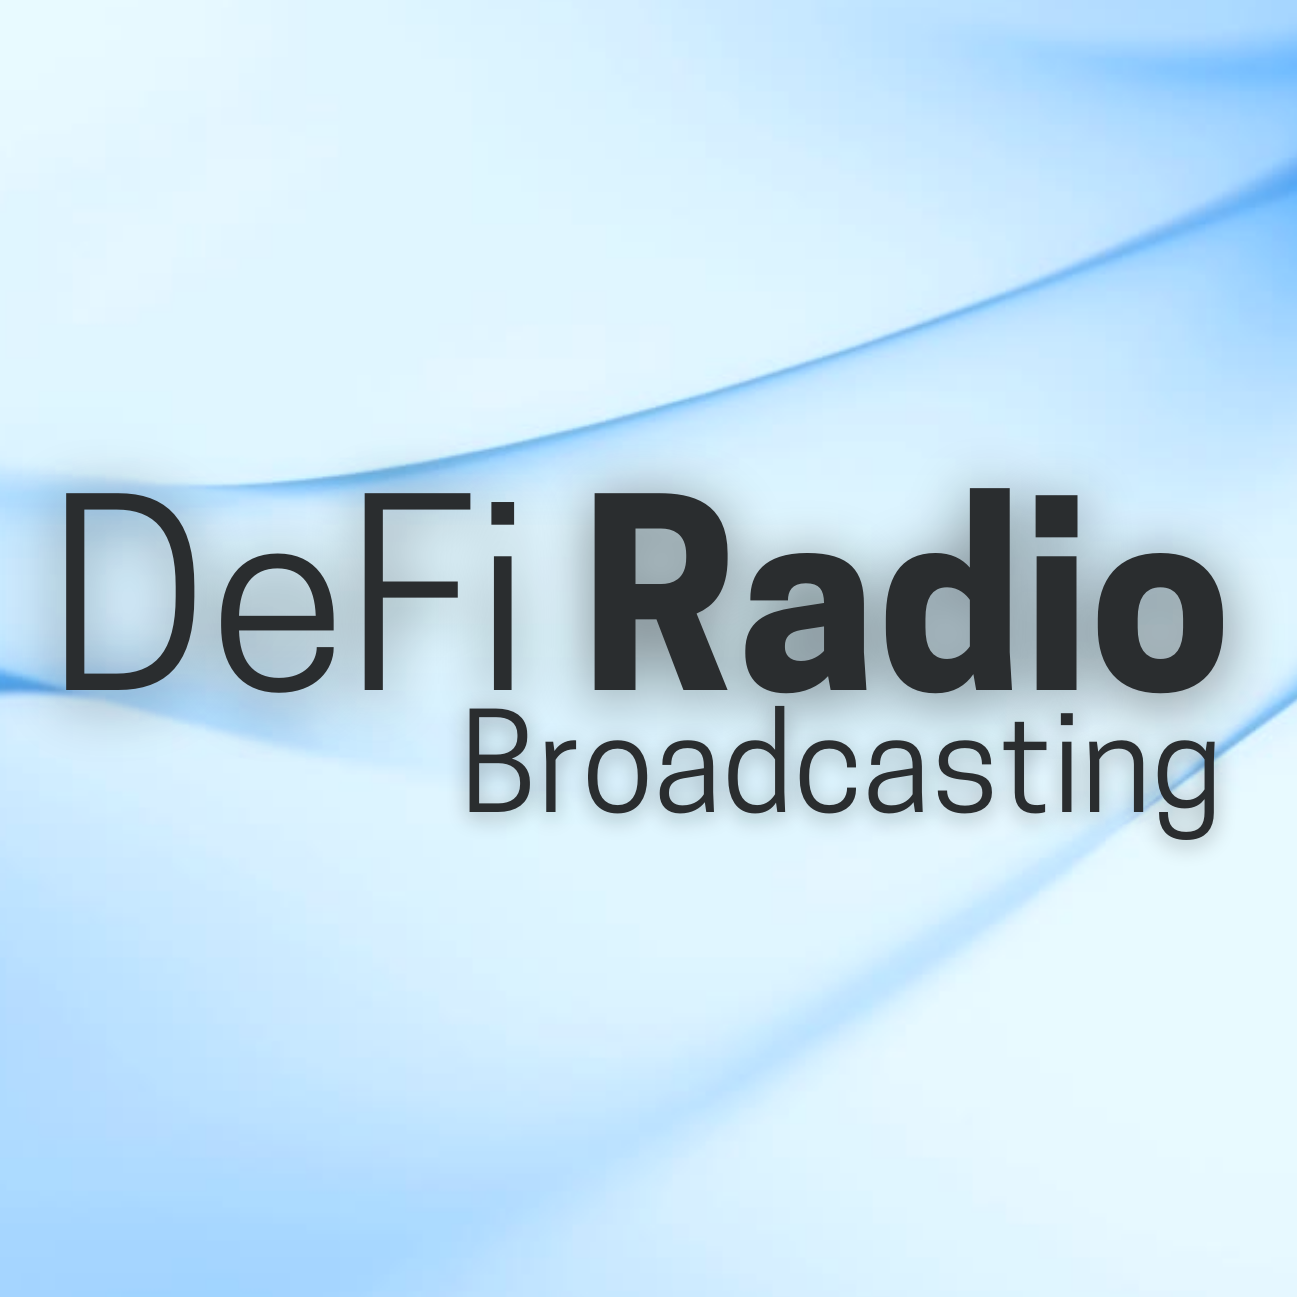 DeFi Radio's FEG Token Voice Chat